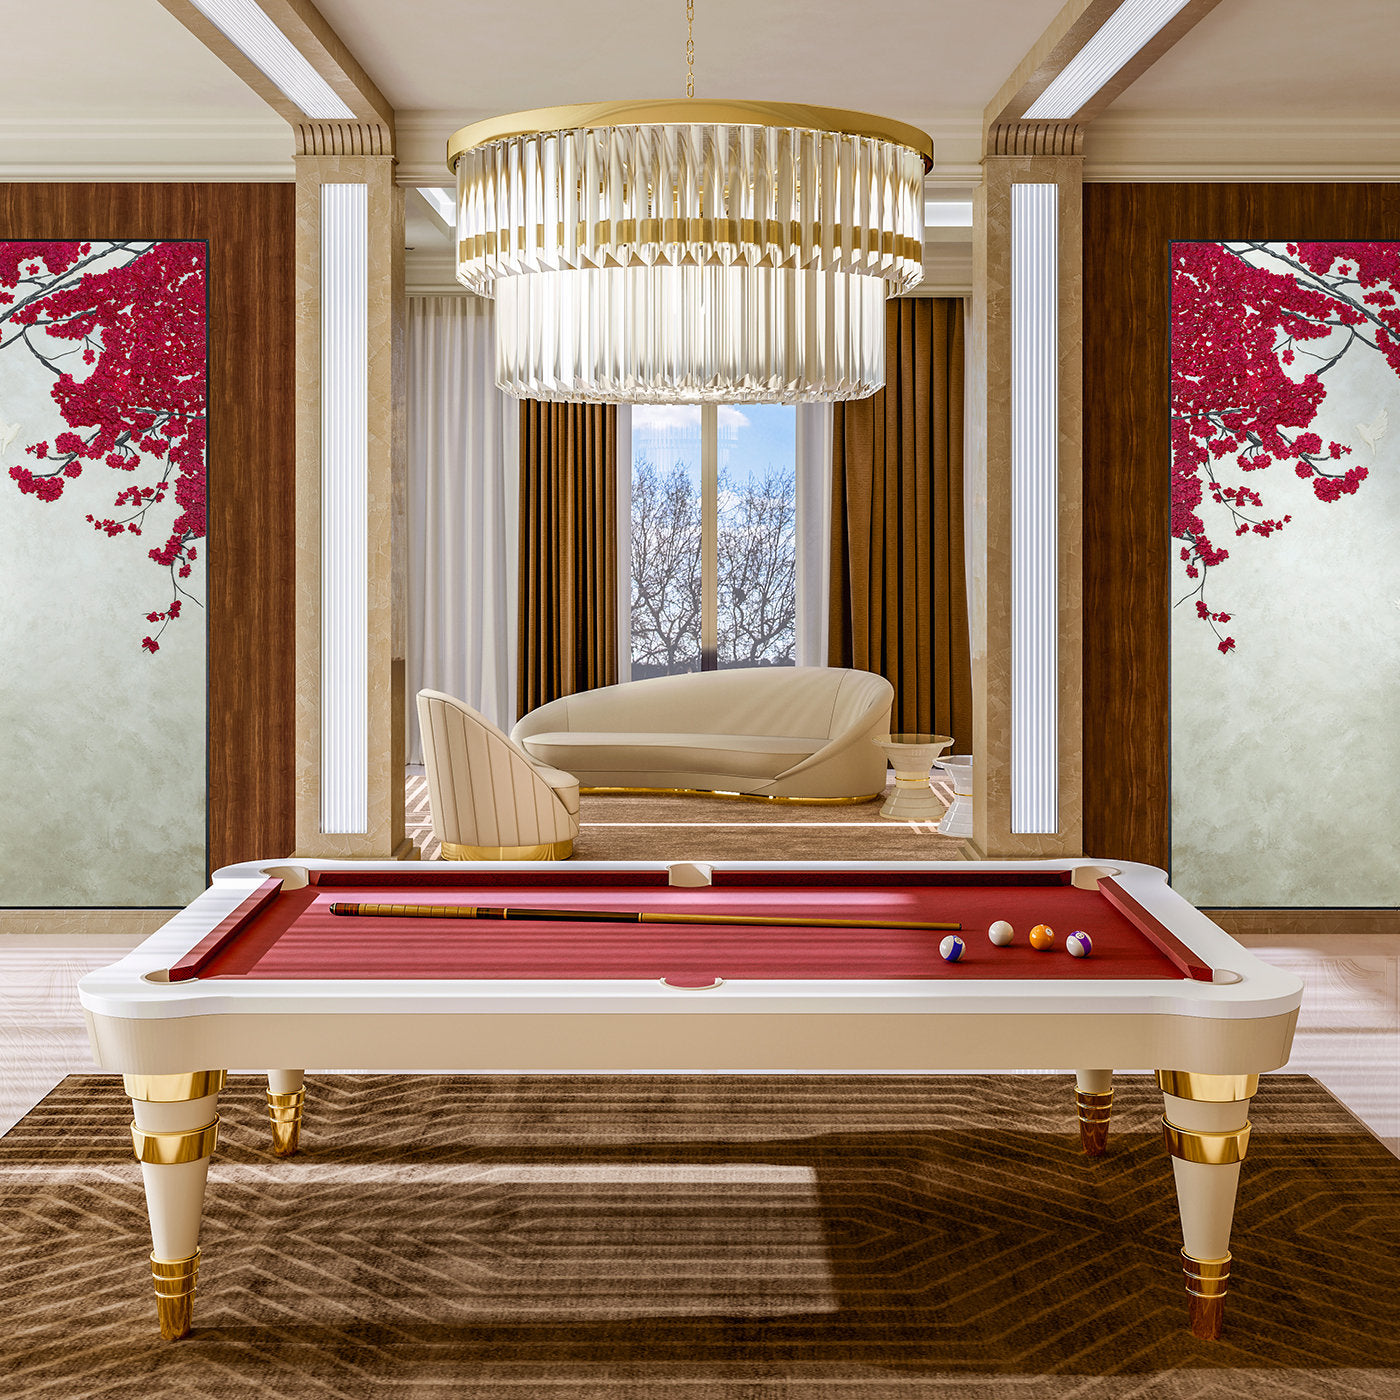 Regis burgundy pool table by Pino Vismara - Alternative view 1